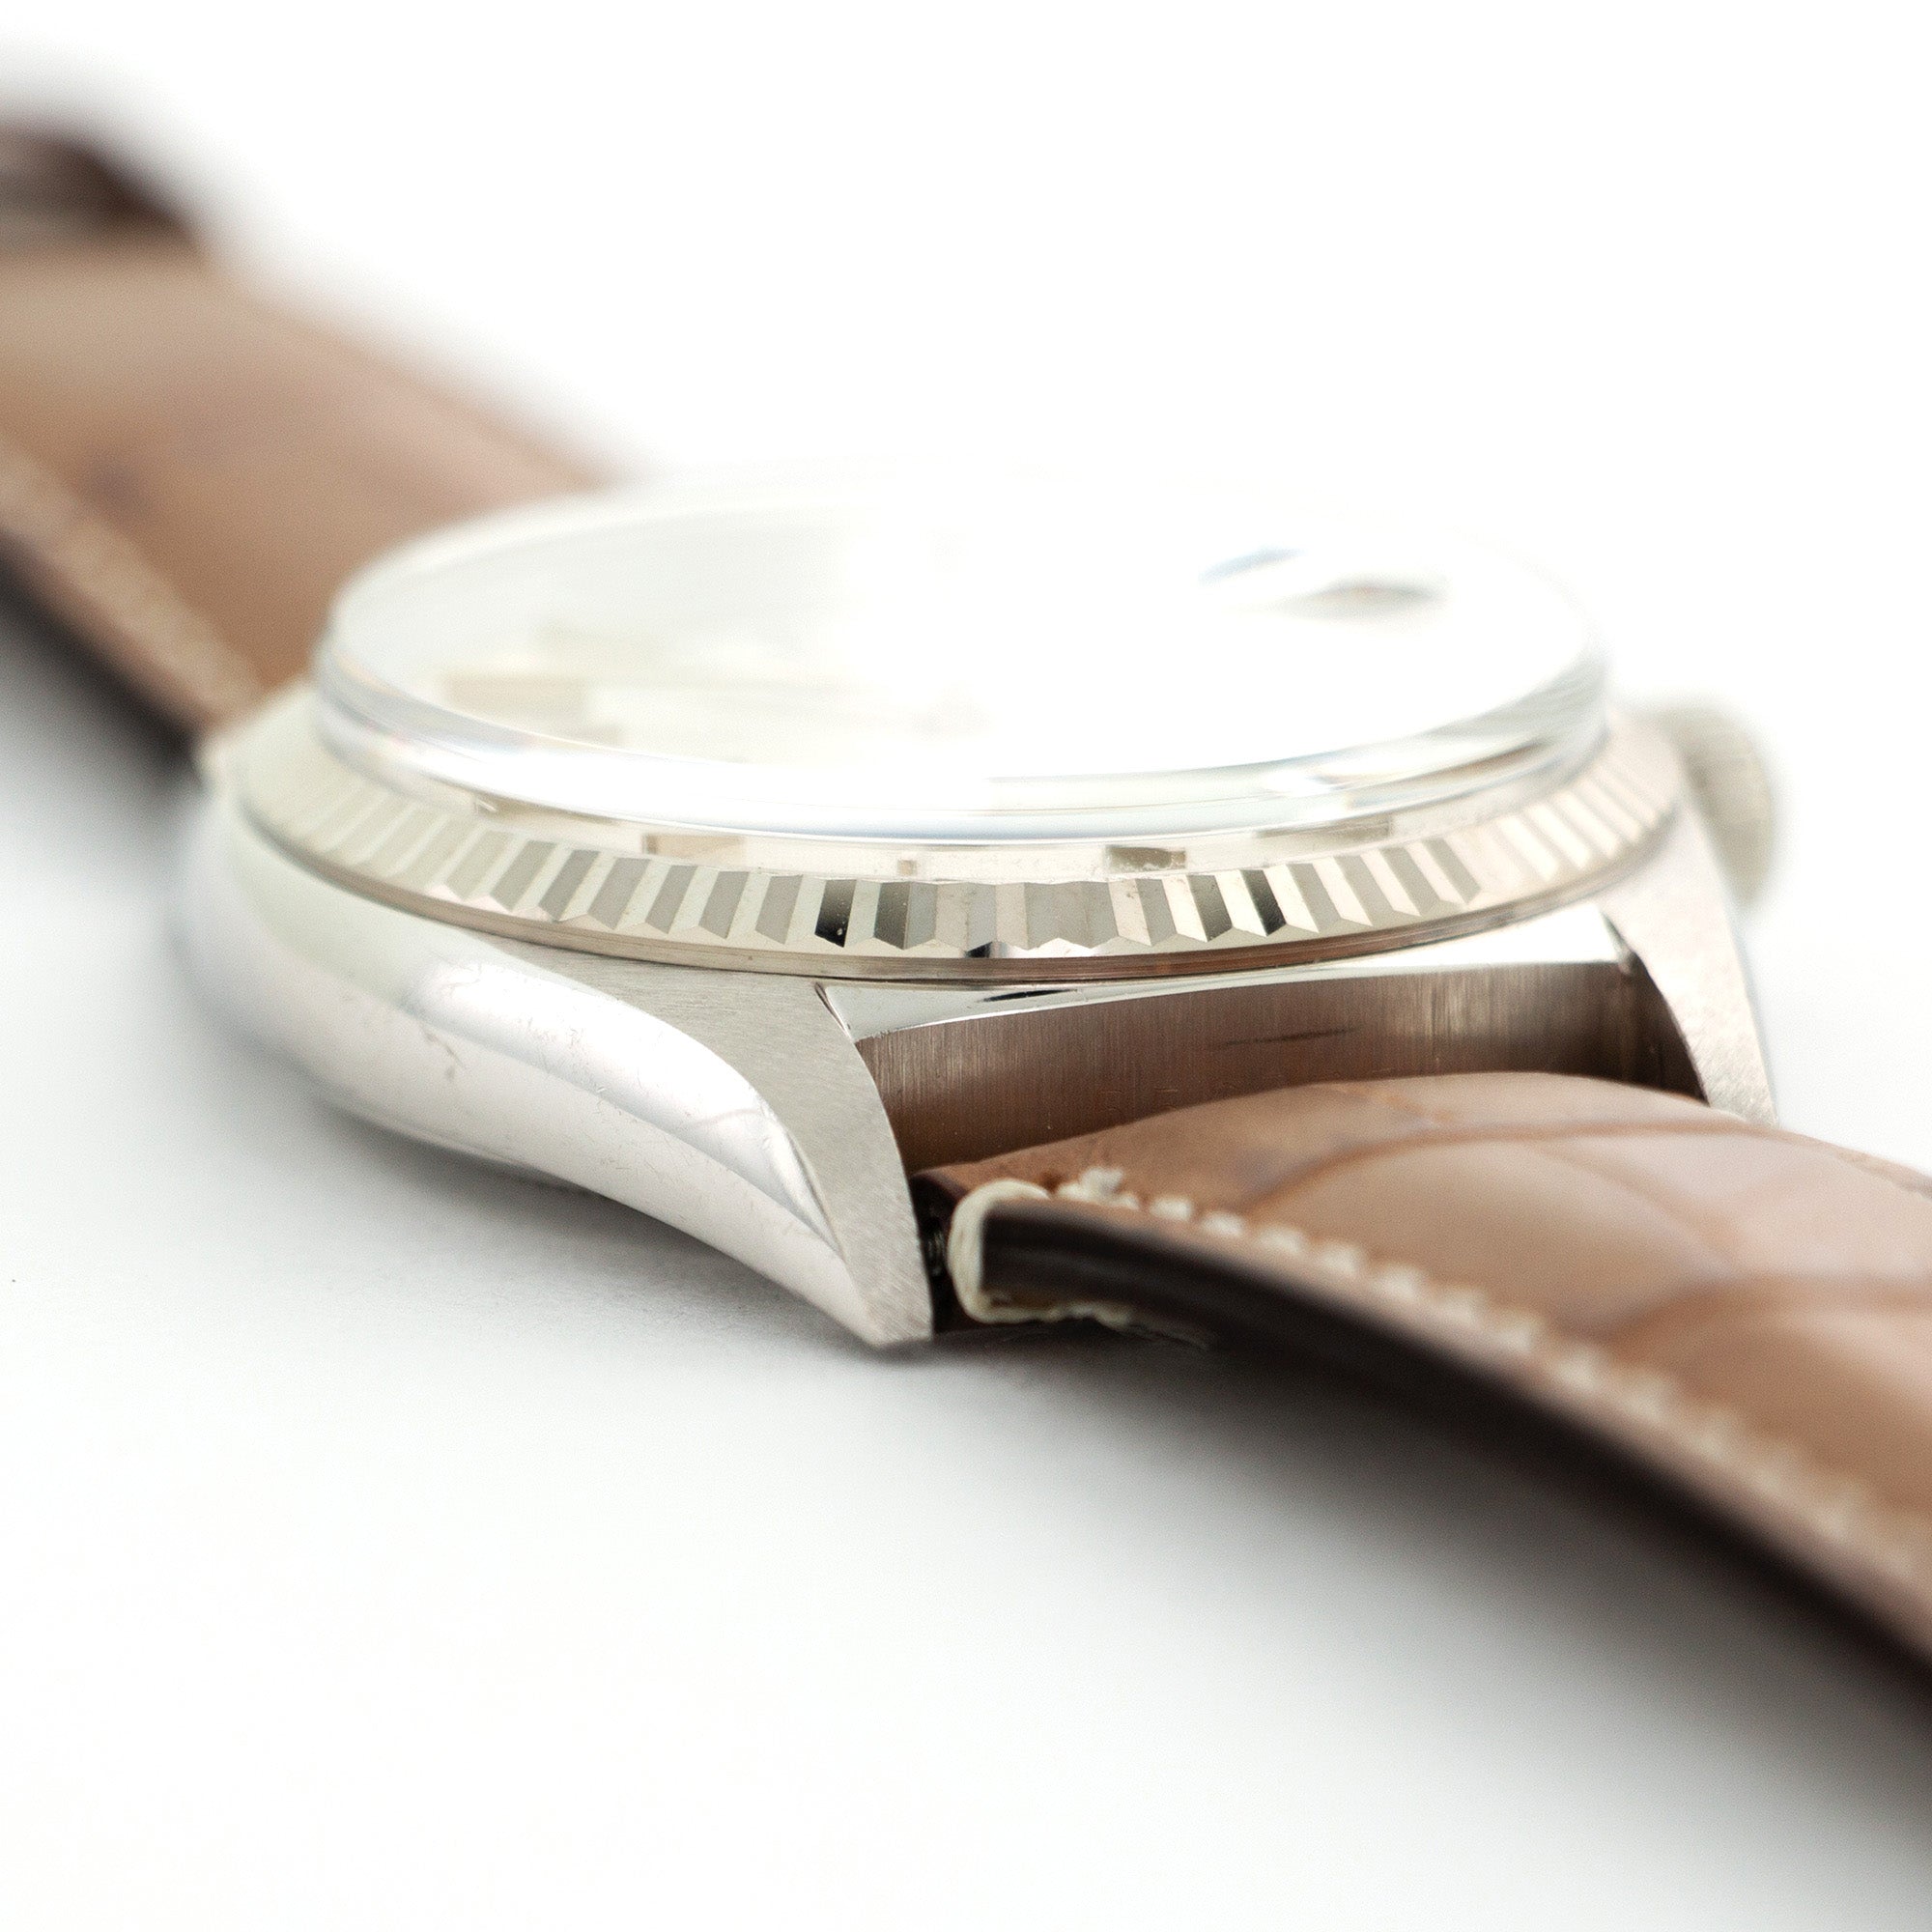 Rolex - Rolex White Gold Day-Date Linen Dial Watch Ref. 1803 - The Keystone Watches